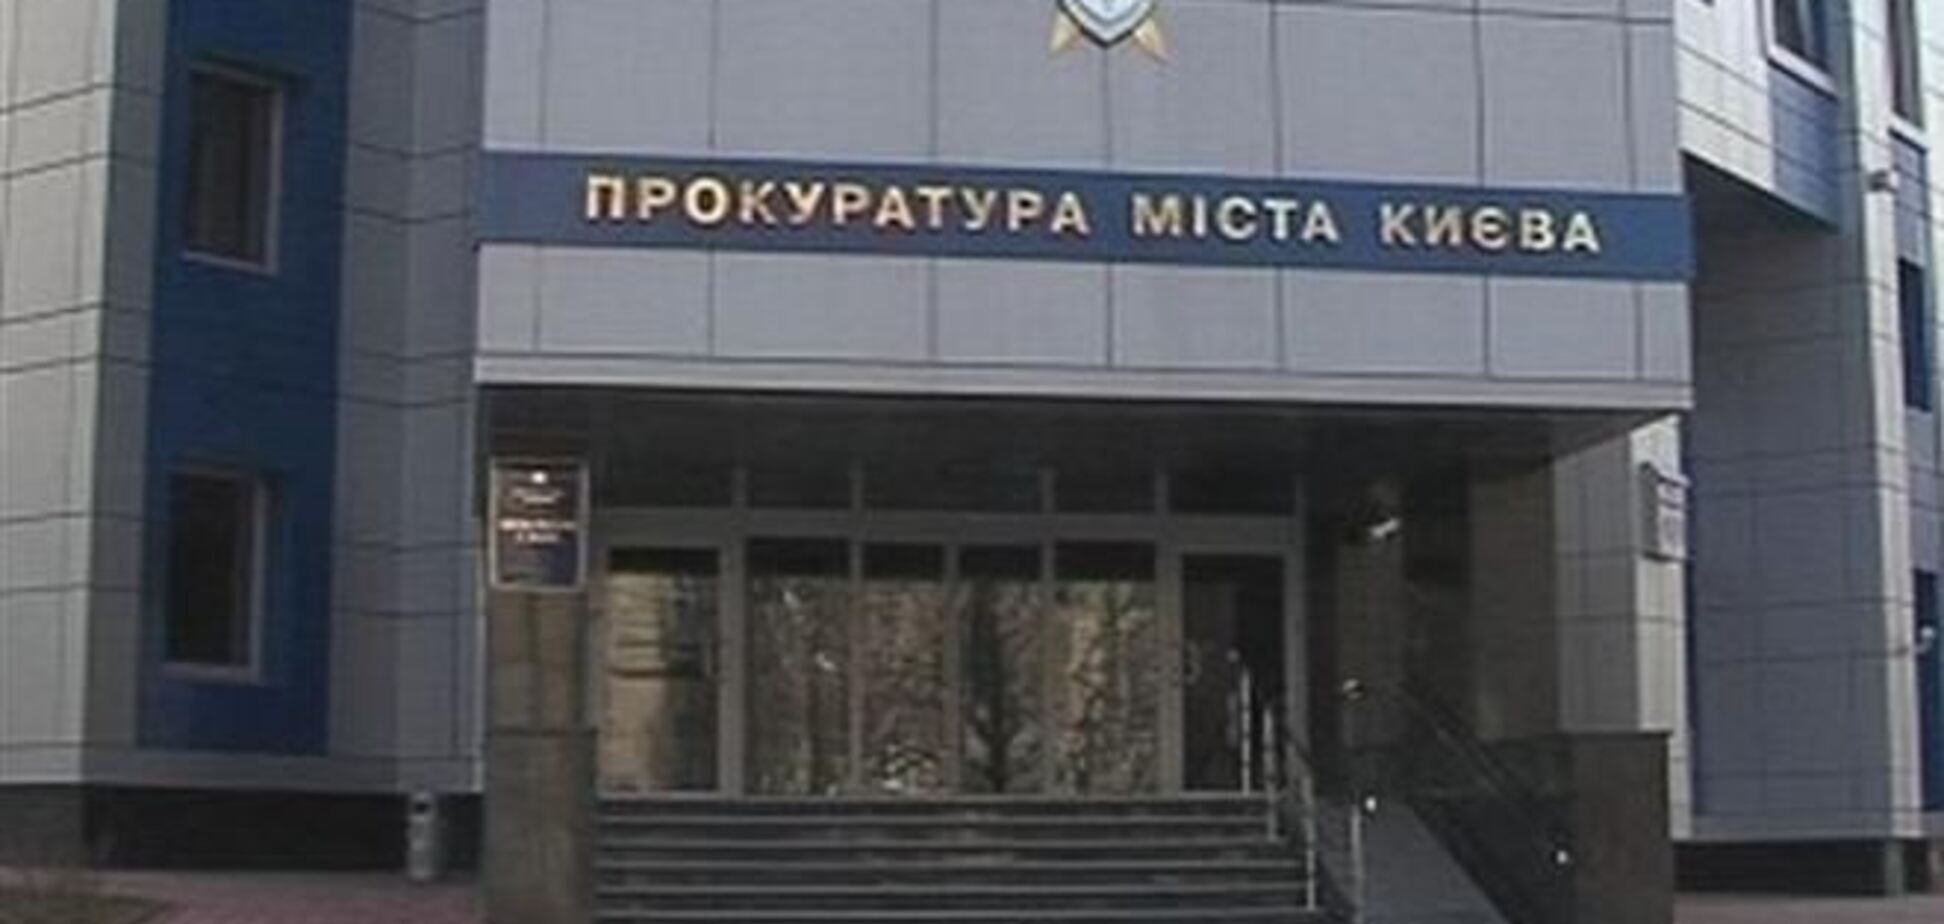 Прокуратура Киева резко сократила штат следователей